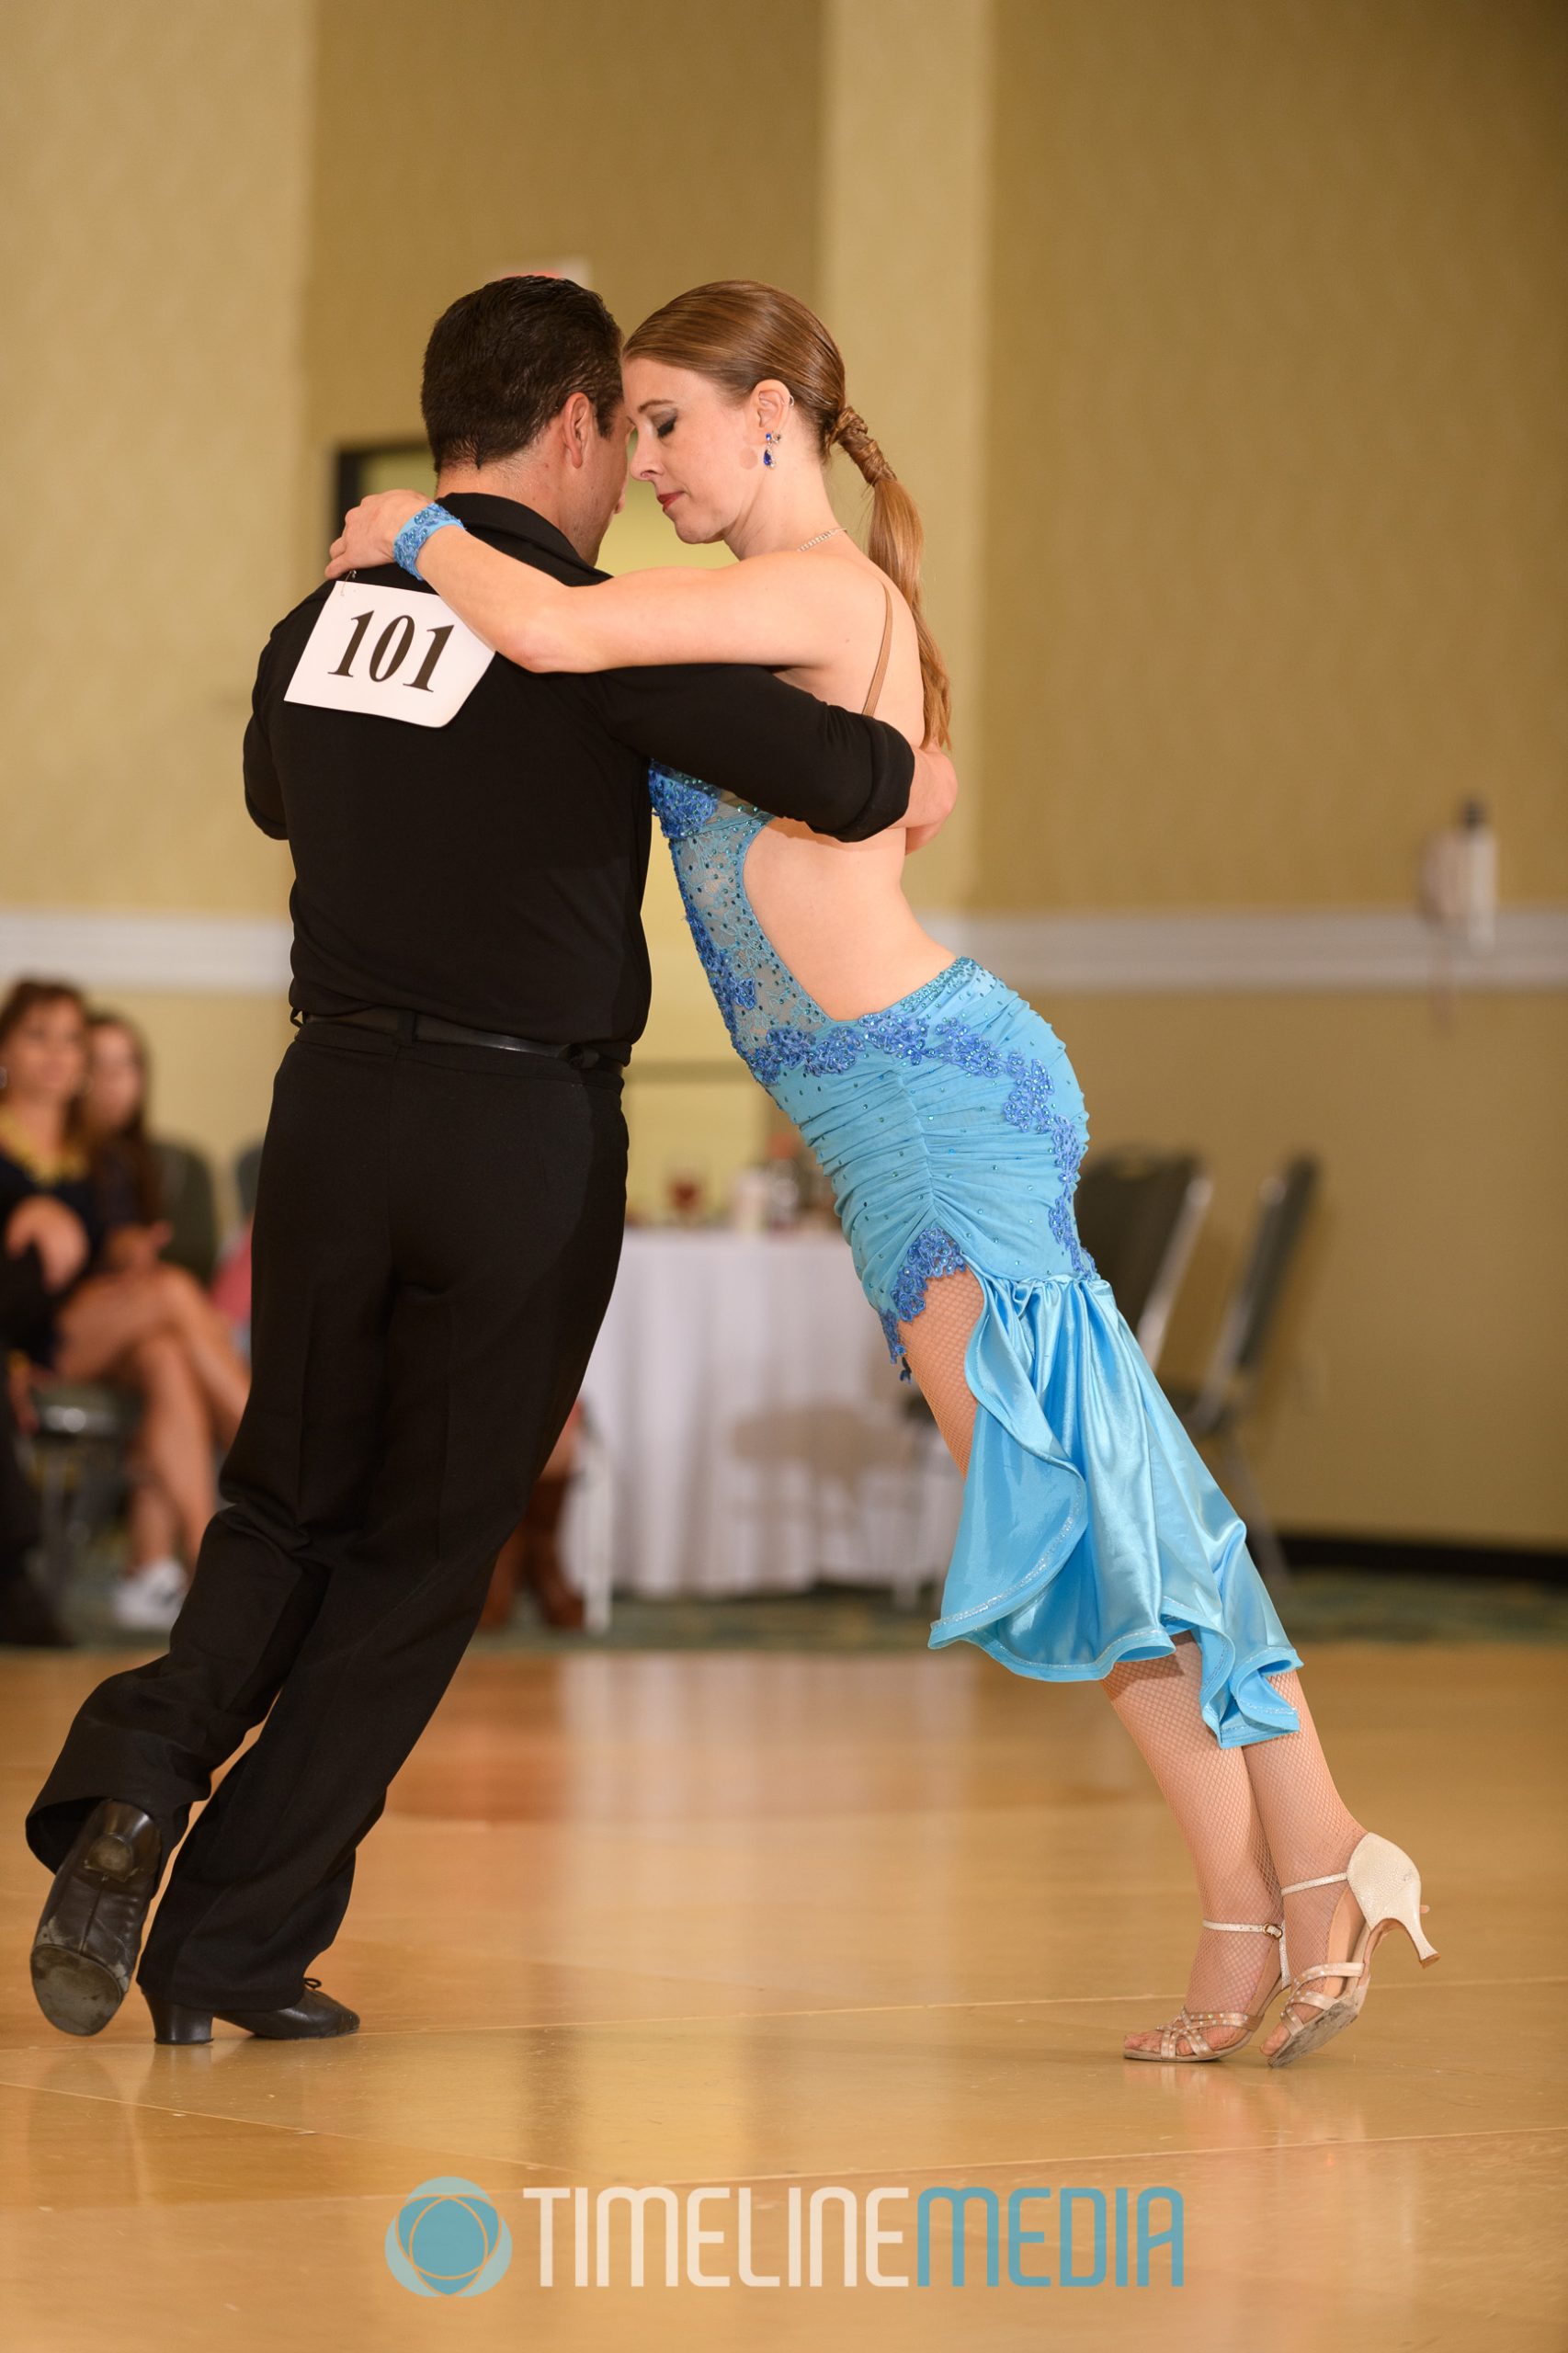 Argentine Tango dancing in Richmond, Virginia ©TimeLine Media